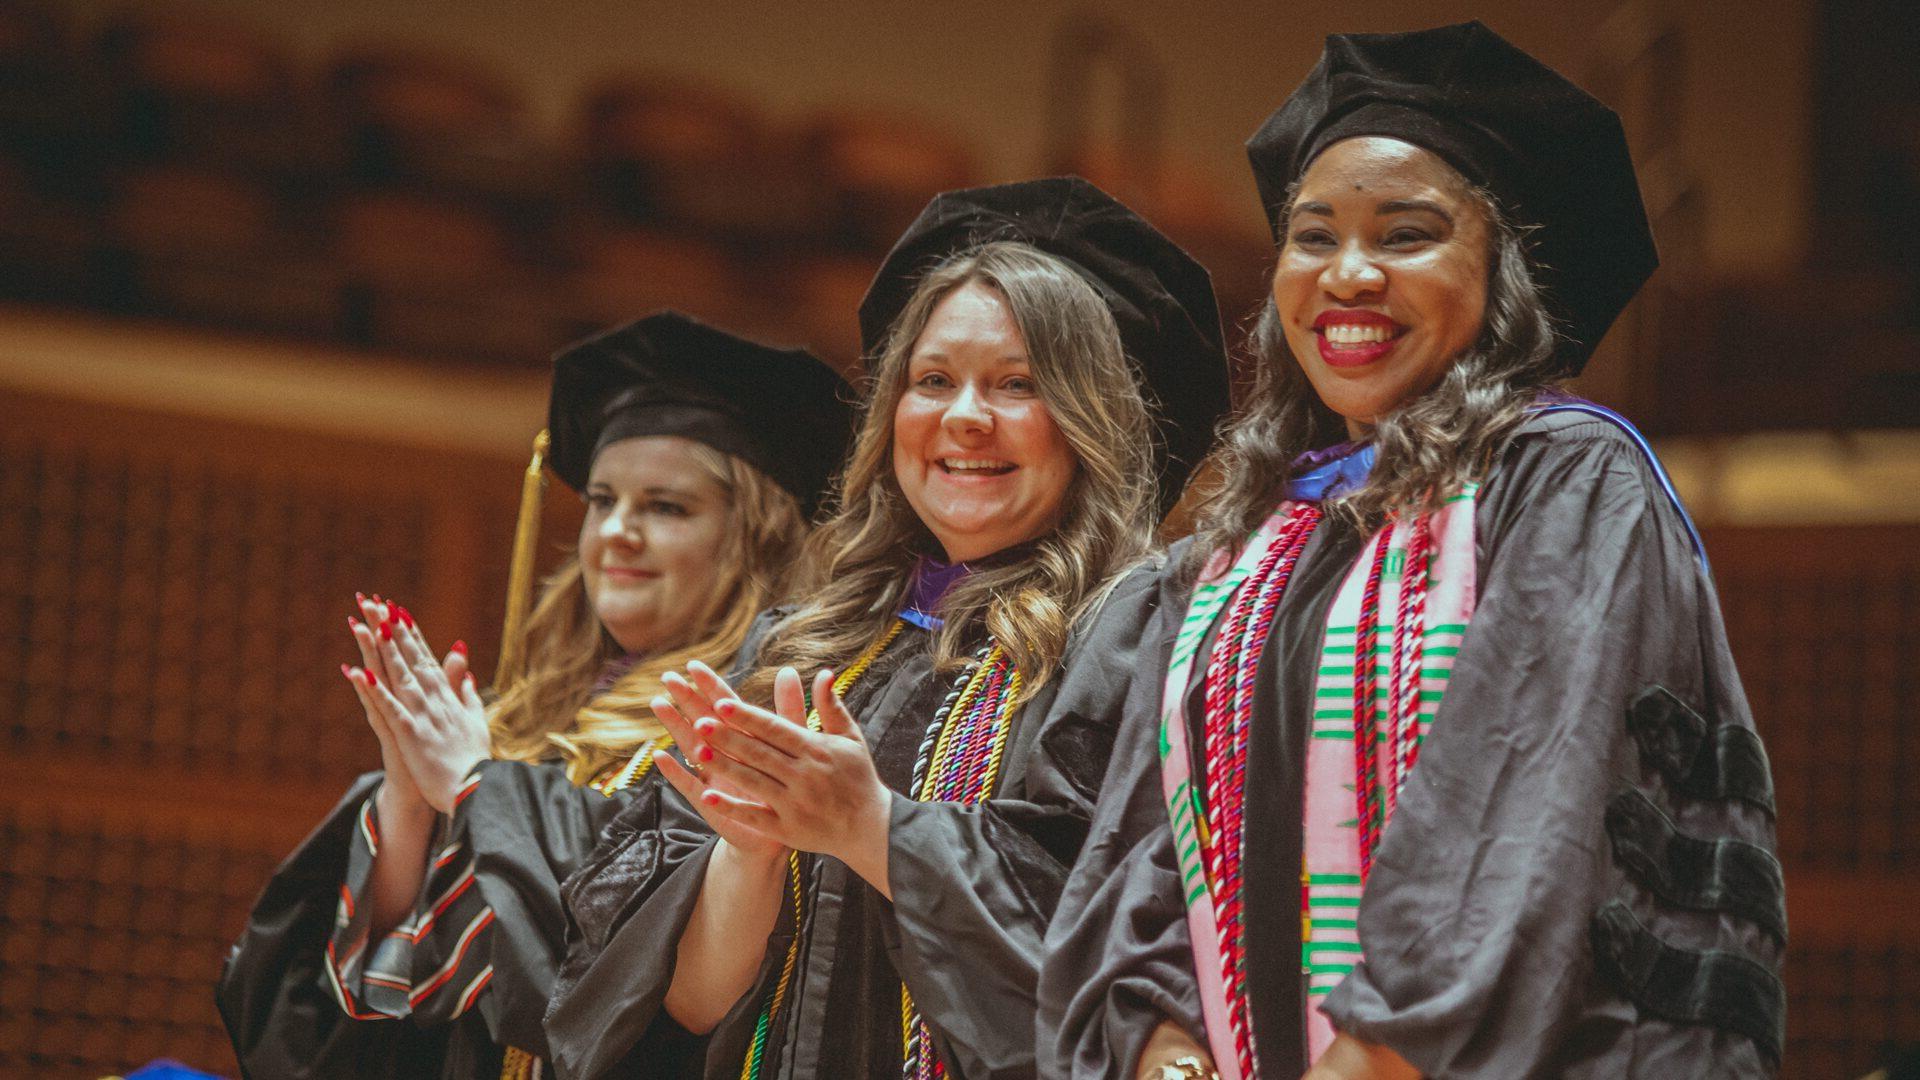 Three graduates in academic regalia smiling and clapping.